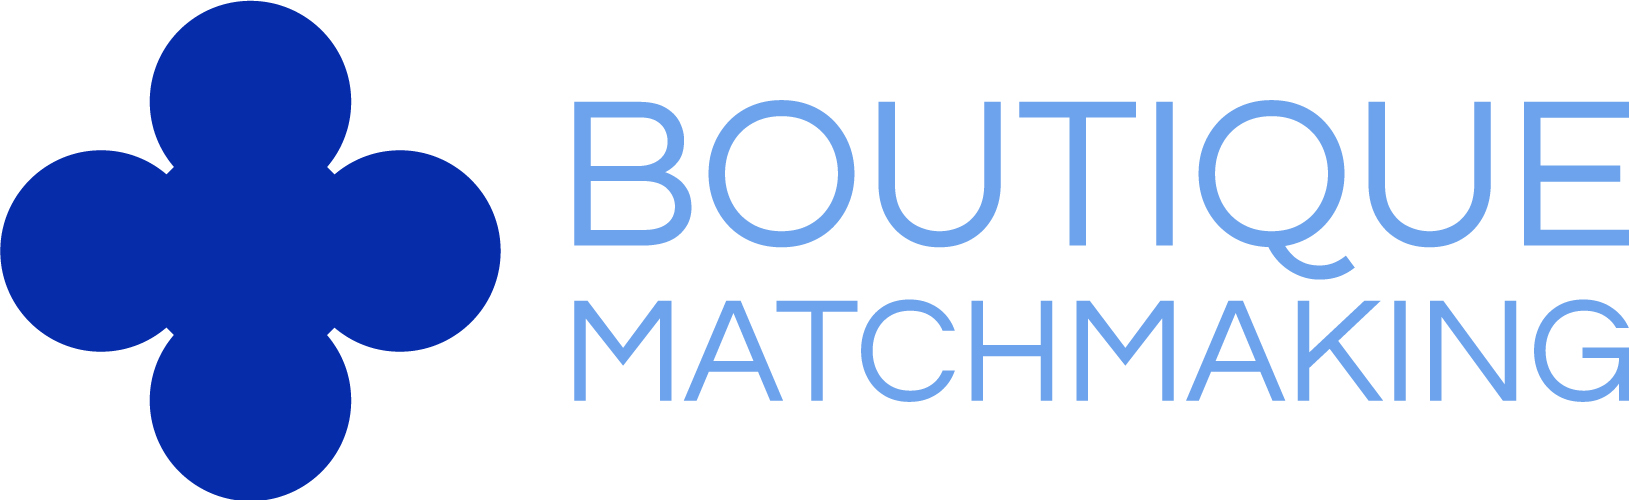 Boutique Matchmaking logo